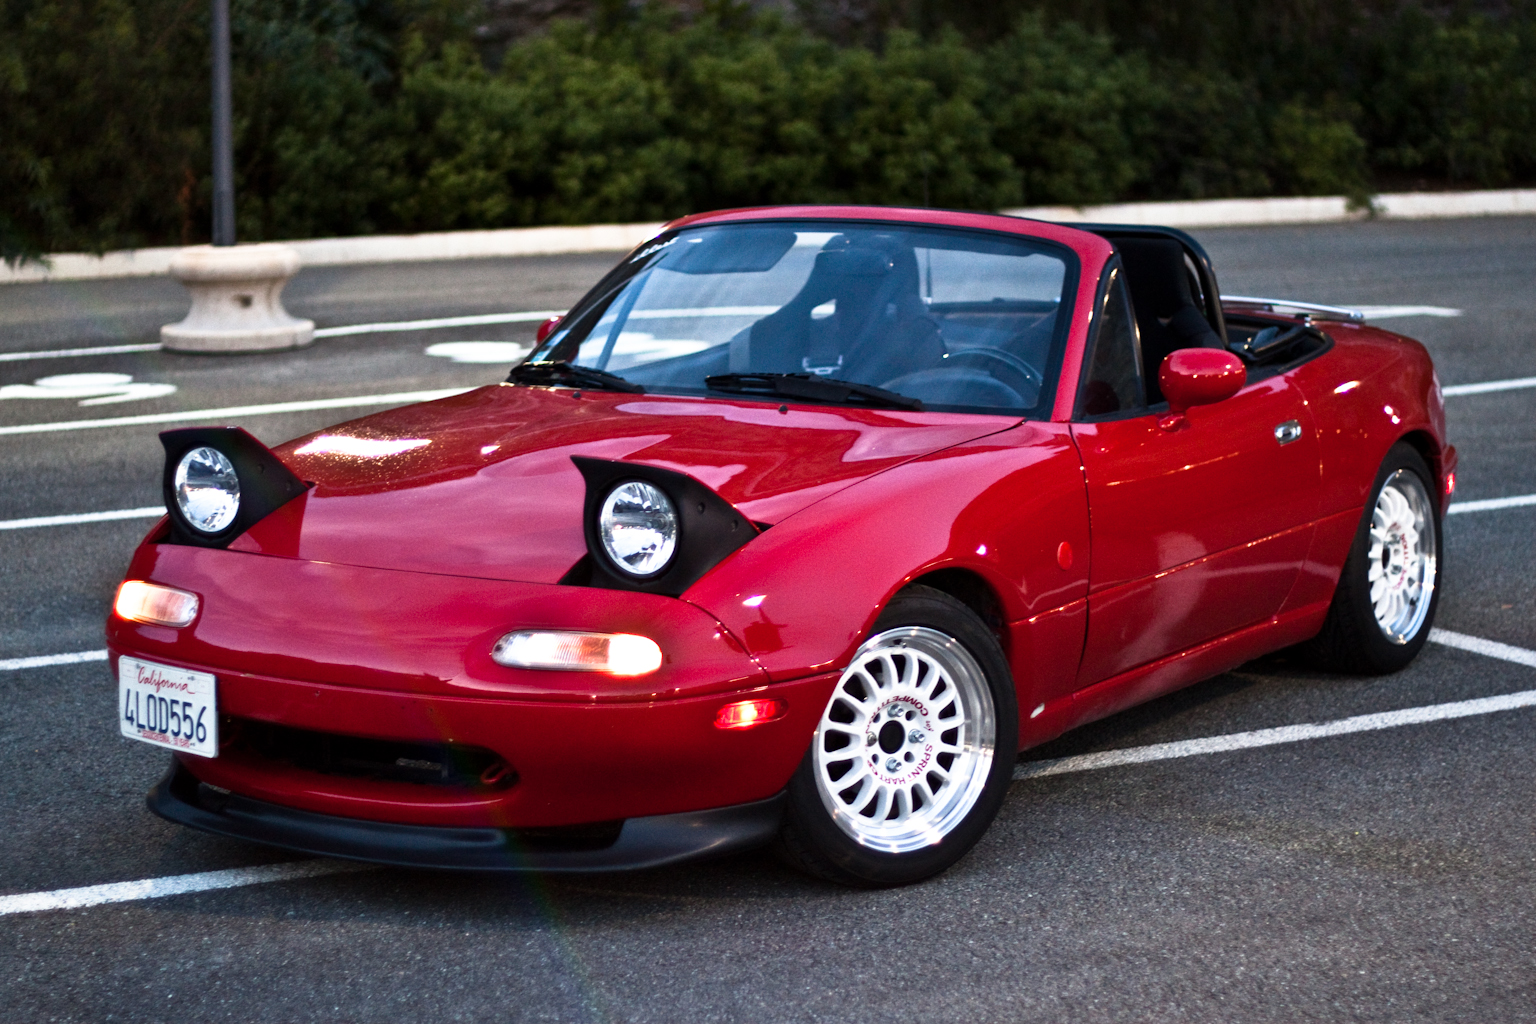 Red Mazda Miata mx5 | Flickr - Photo Sharing!